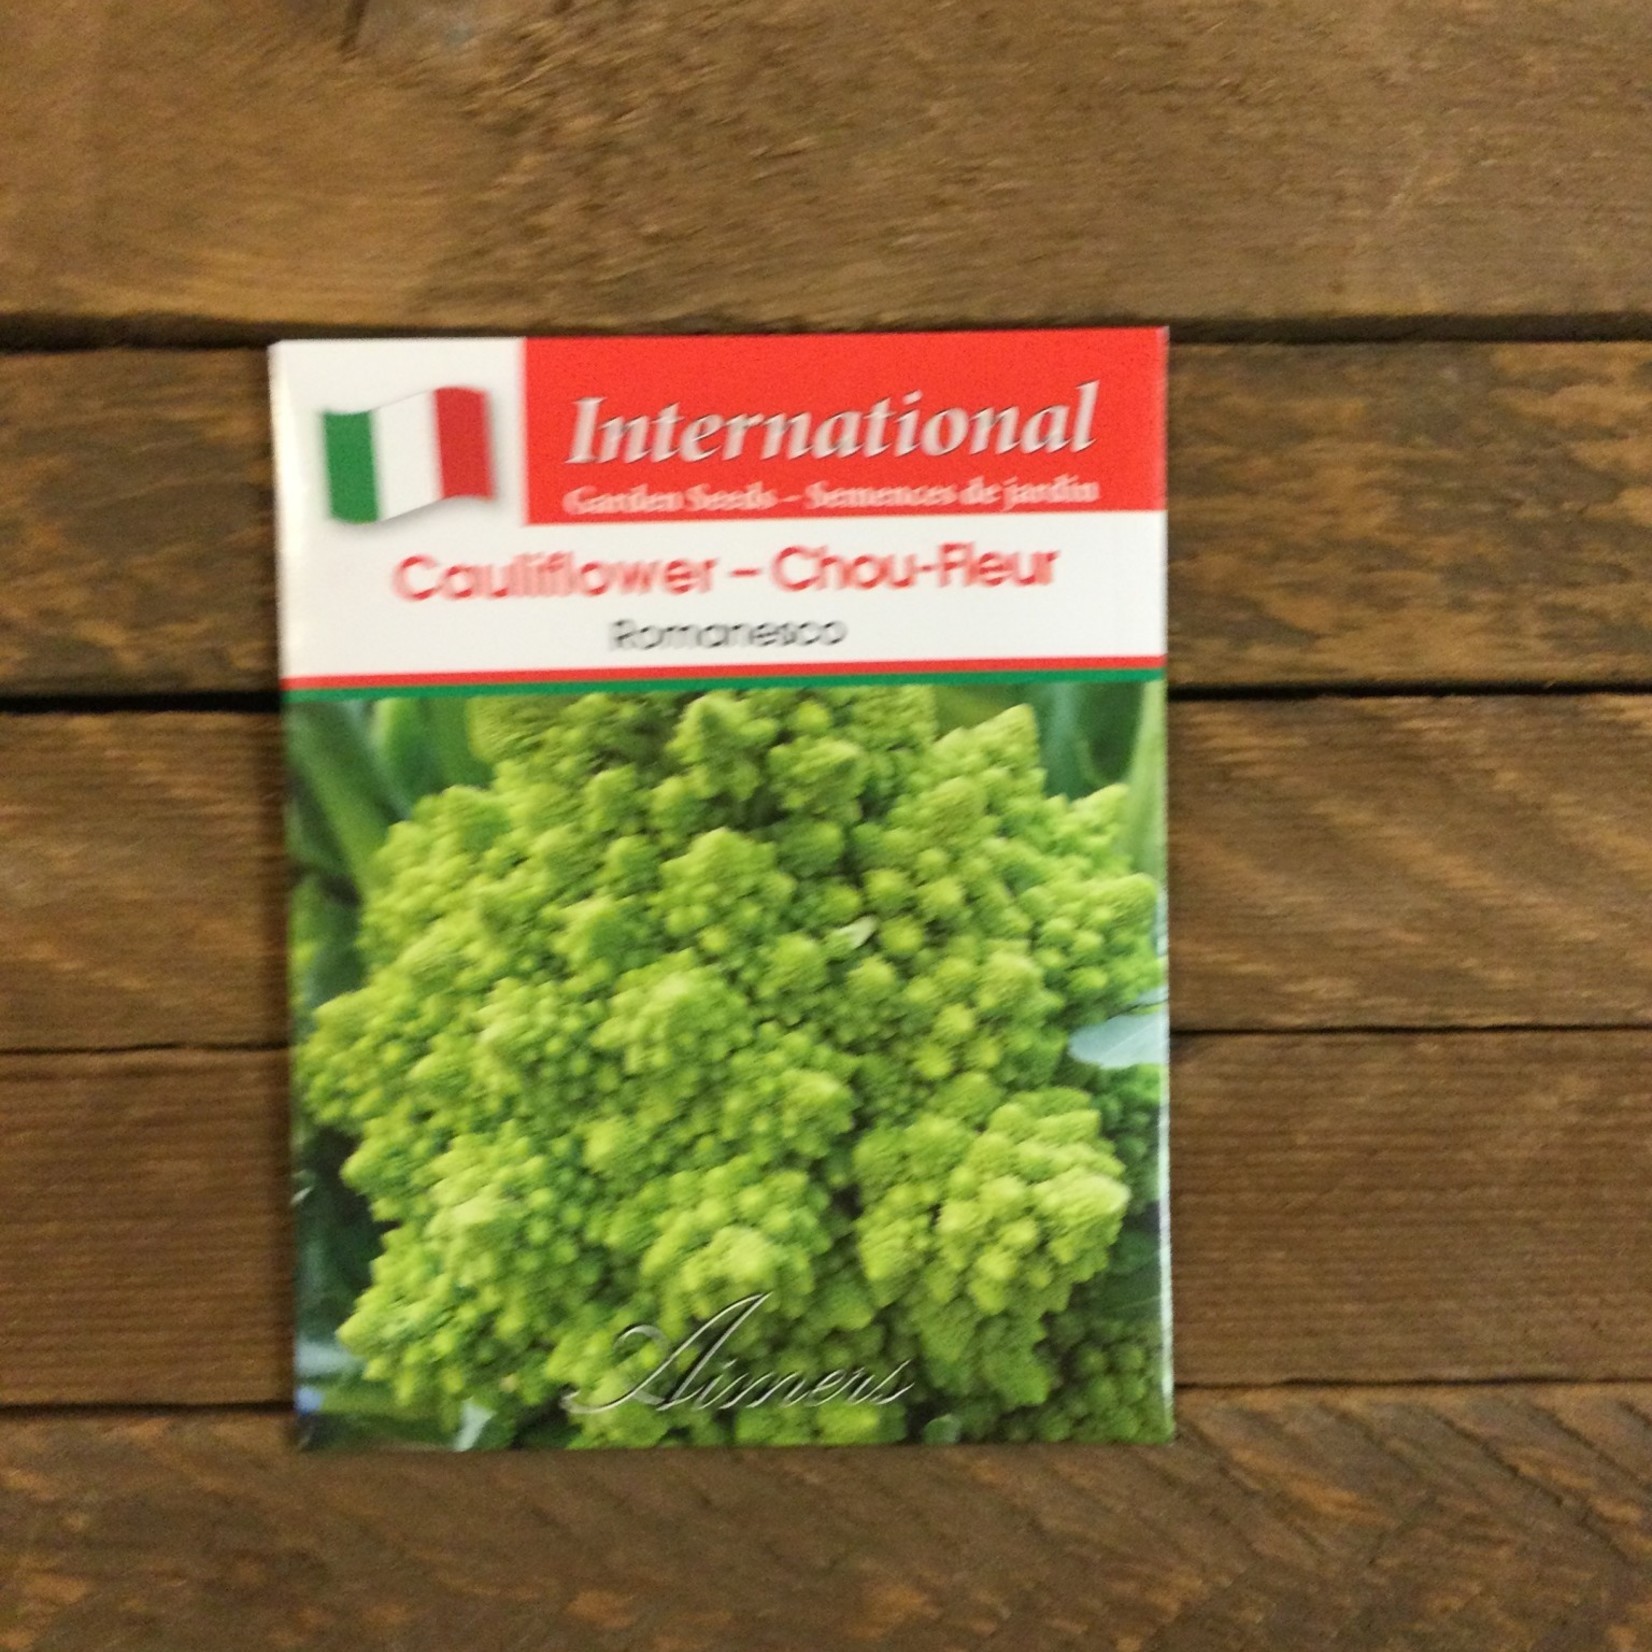 Aimers International Cauliflower 'Romanesco'